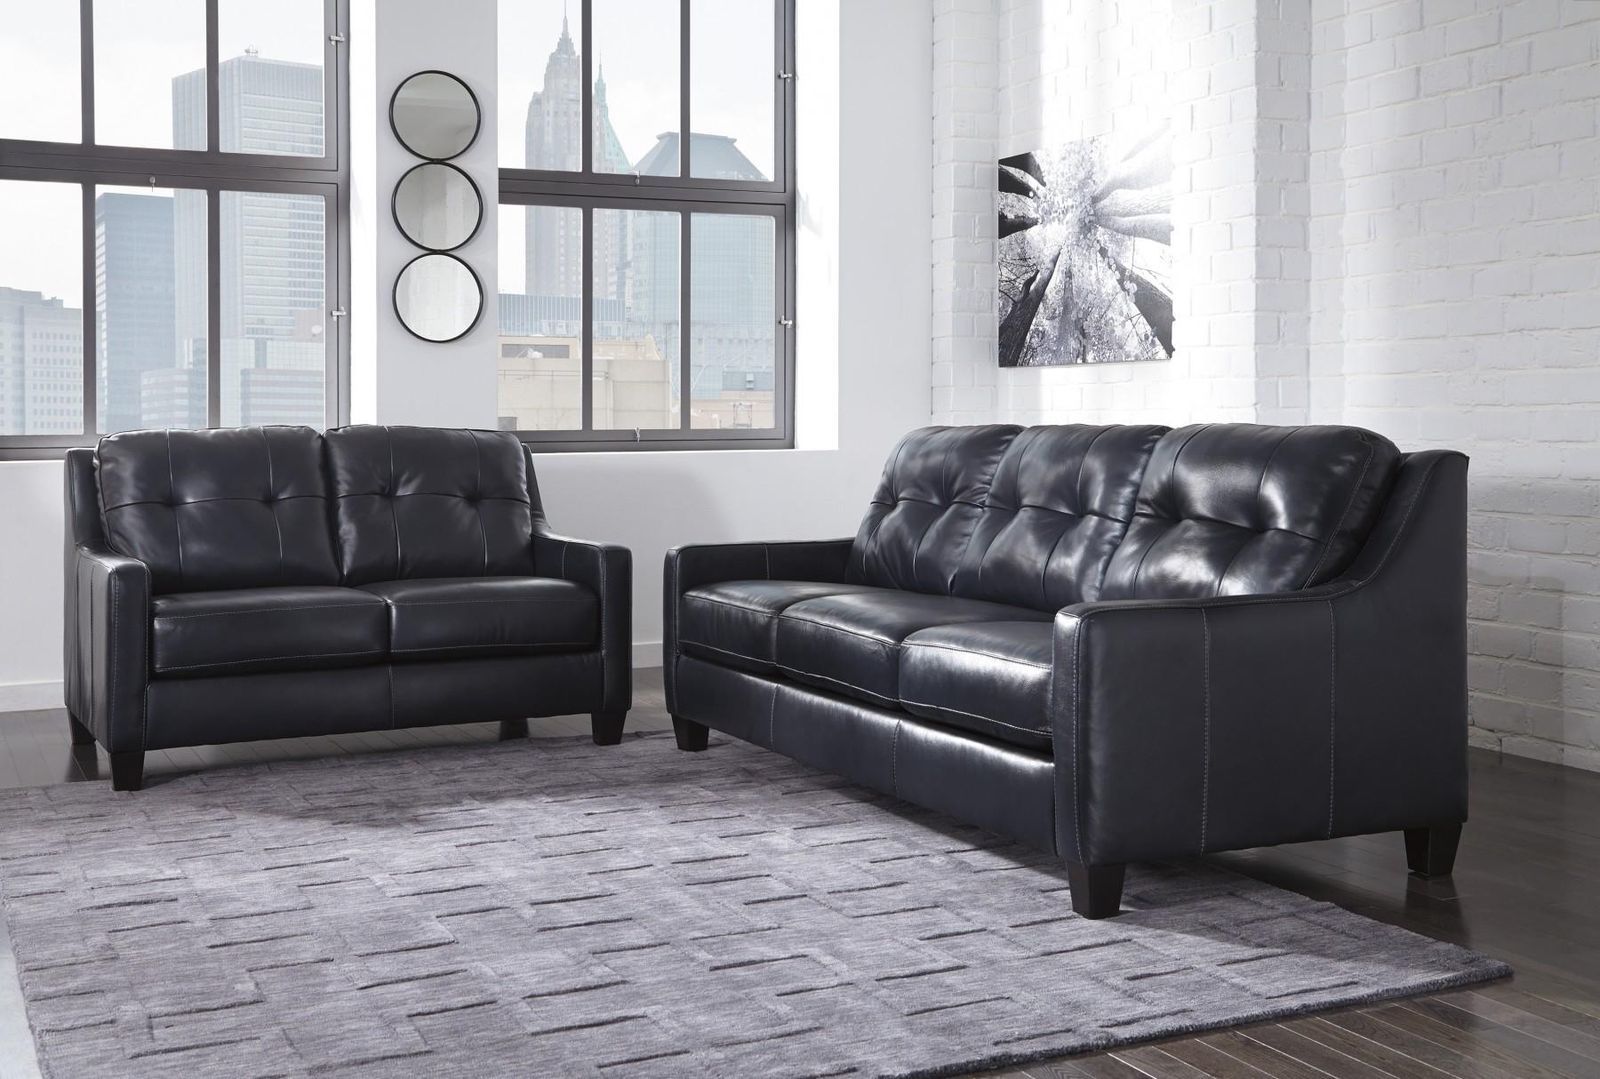 o'kean leather sleeper sofa